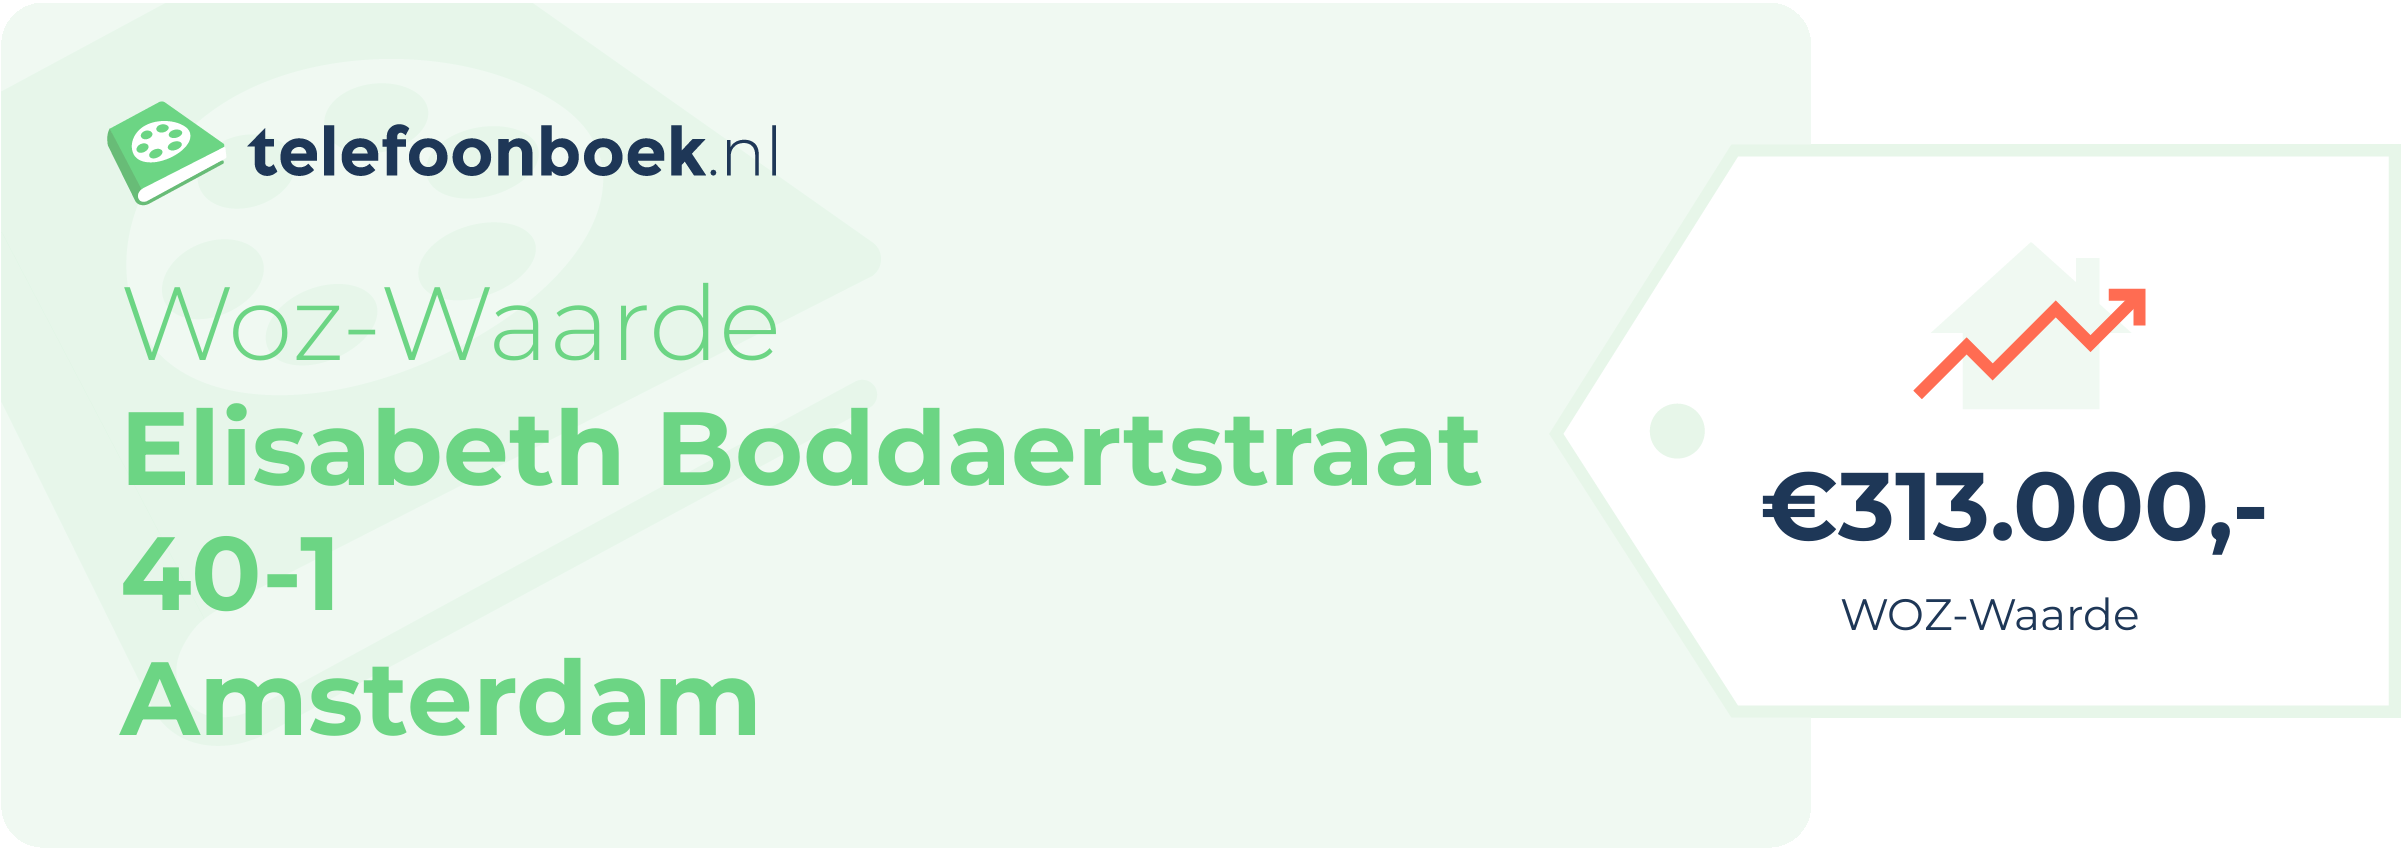 WOZ-waarde Elisabeth Boddaertstraat 40-1 Amsterdam